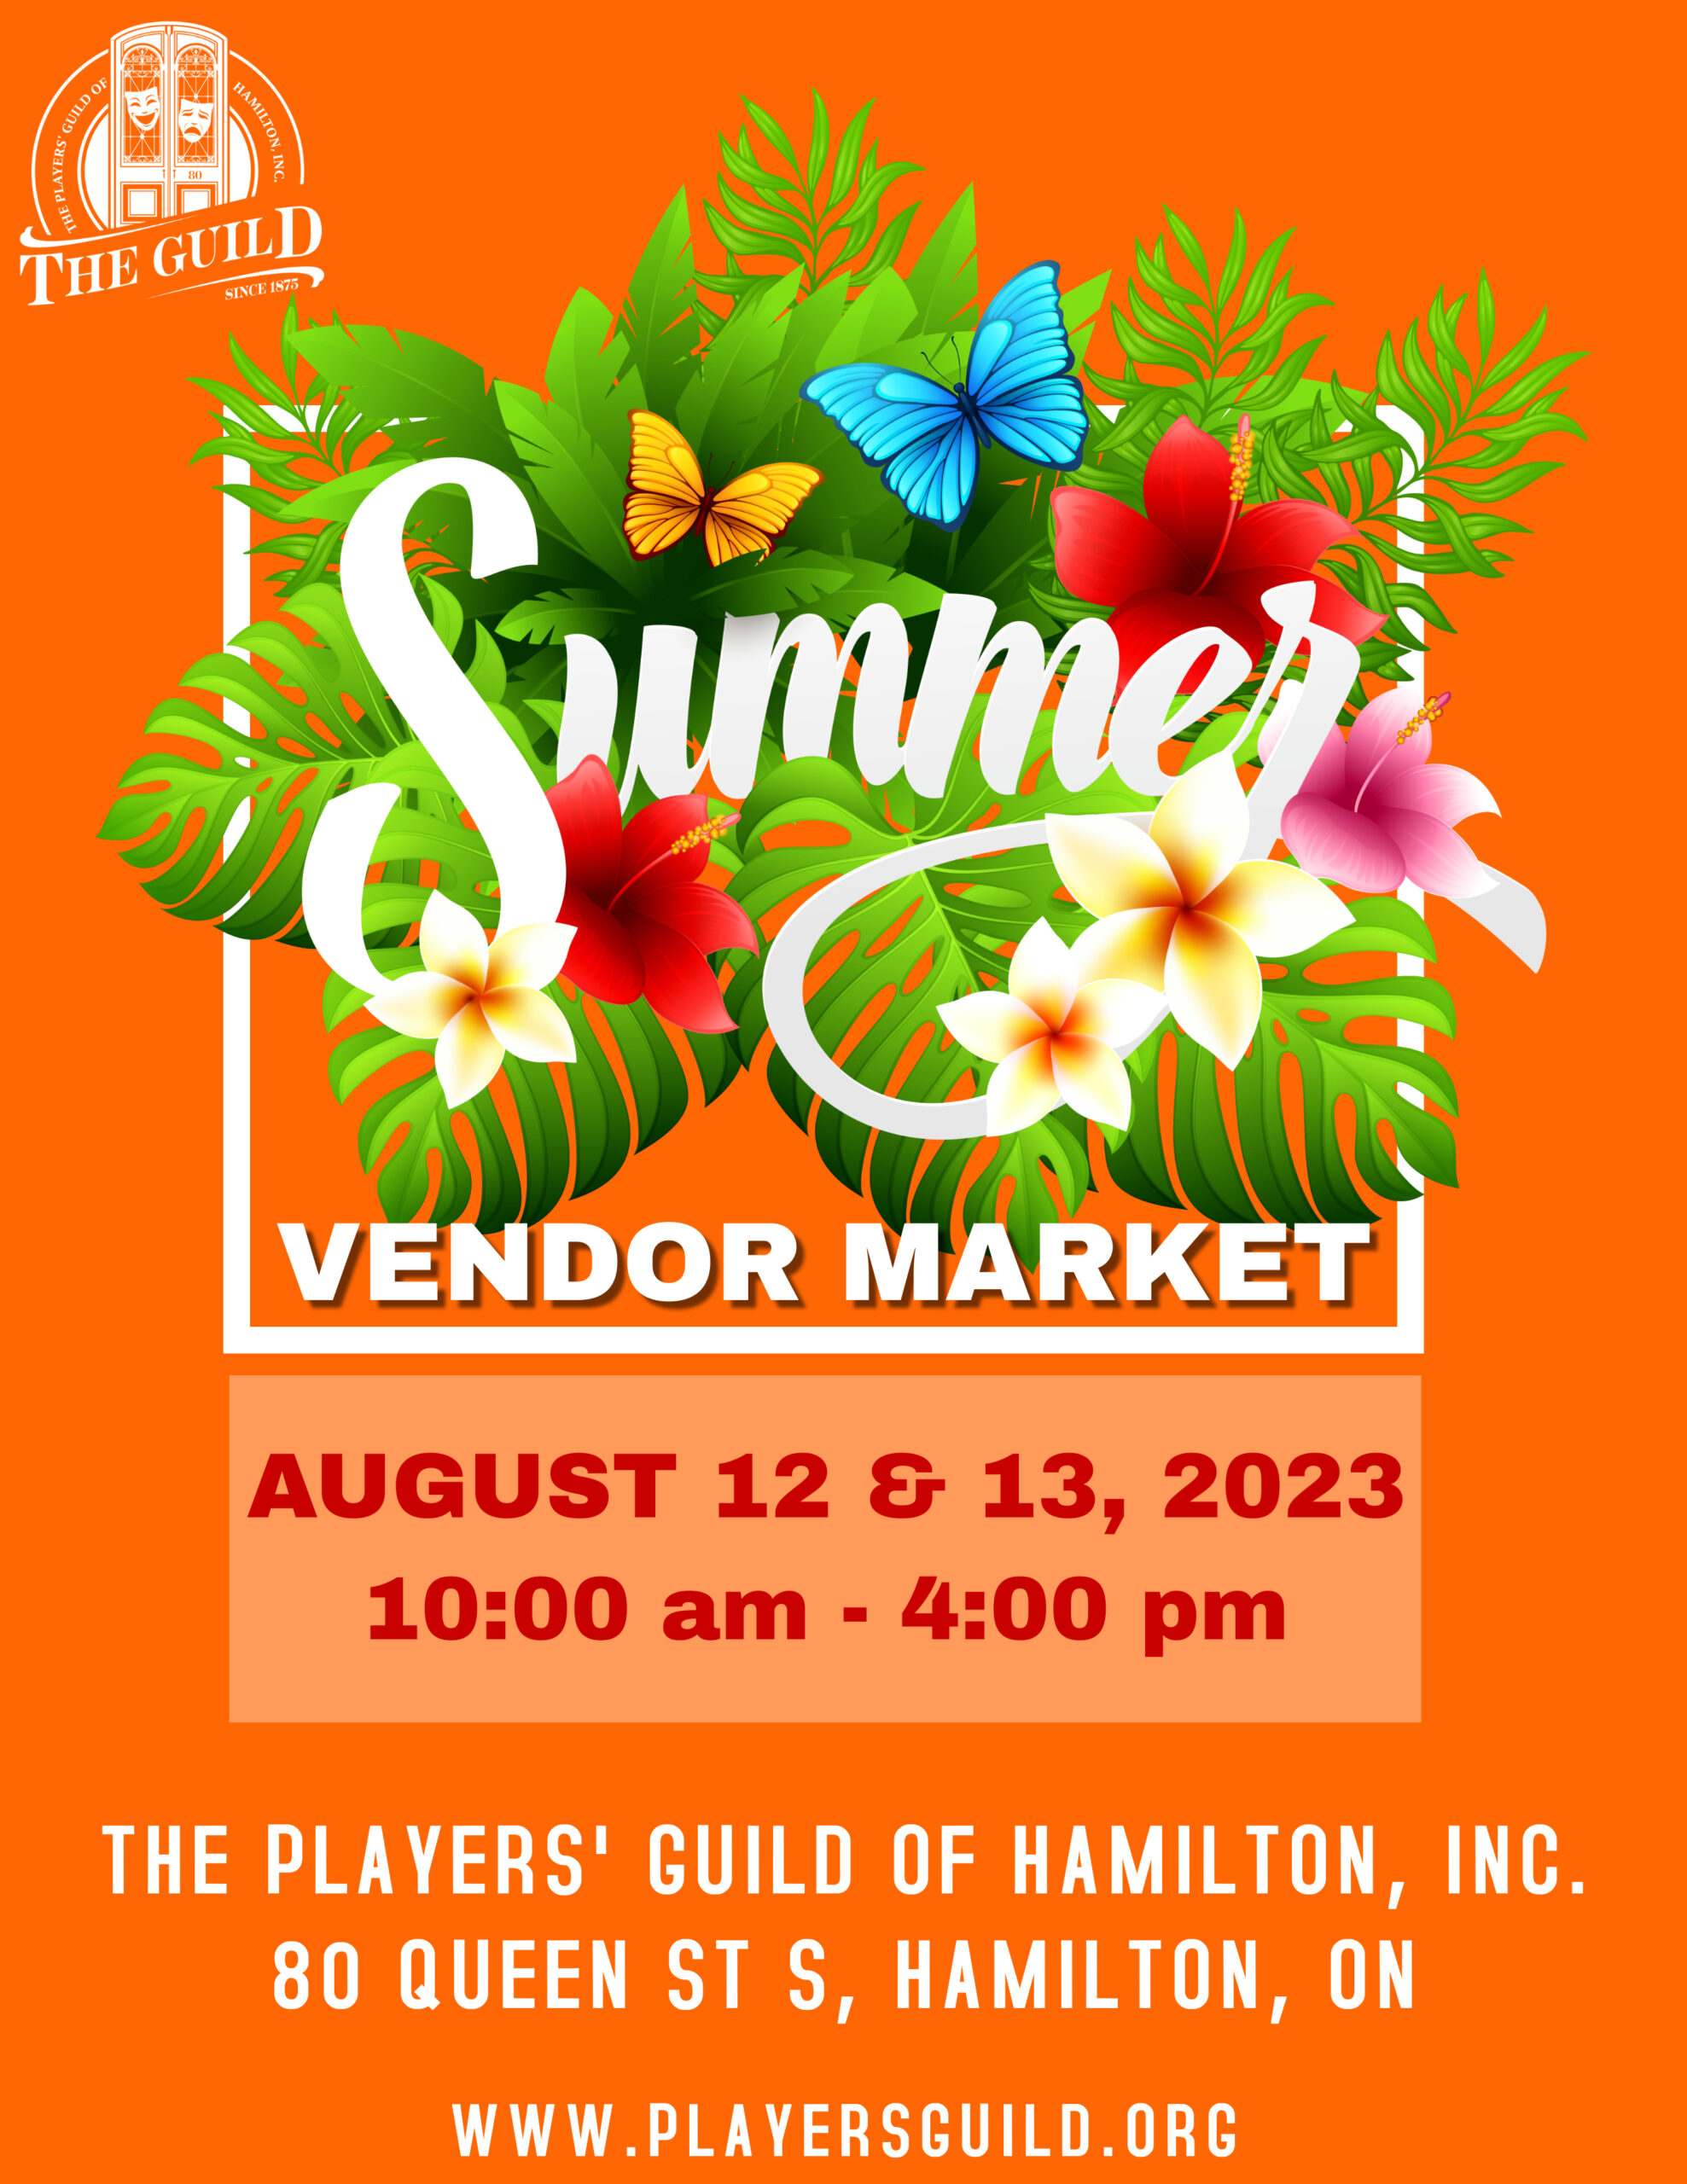 Special Events at The Guild Summer Vendor Market